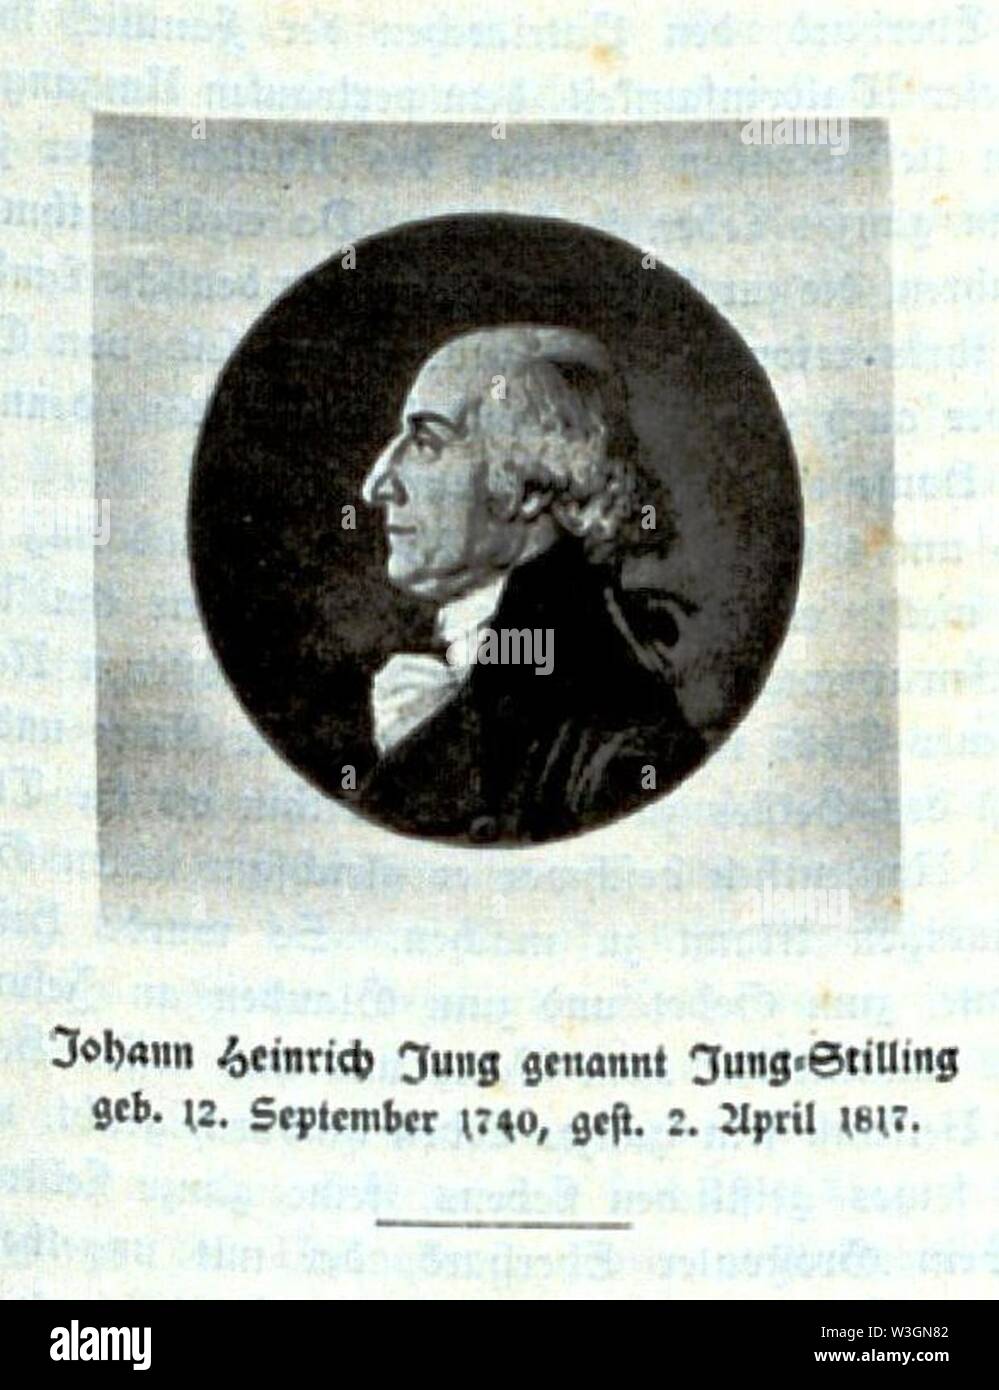 CHRONIK DER FAMILIE FLENDER, Ludwig Voss (Verlag), Düsseldorf 1900, S. 35 (Johann Heinrich Jung genannt Jung-Stilling). Stock Photo